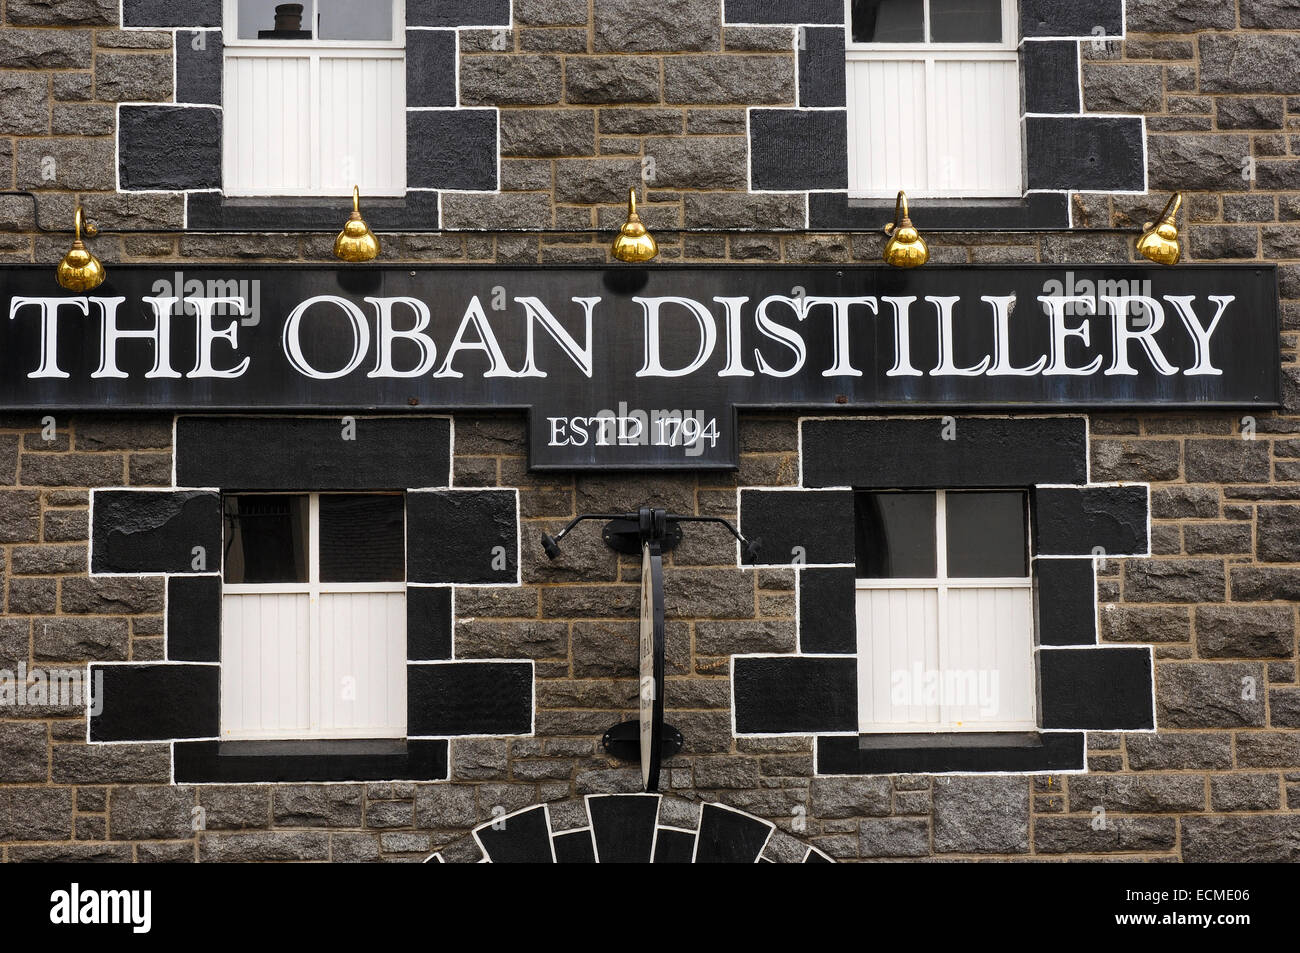 Oban Whisky distillery, 1794, West Highlands, Argyll and Bute, Scotland, United Kingdom, Europe Stock Photo